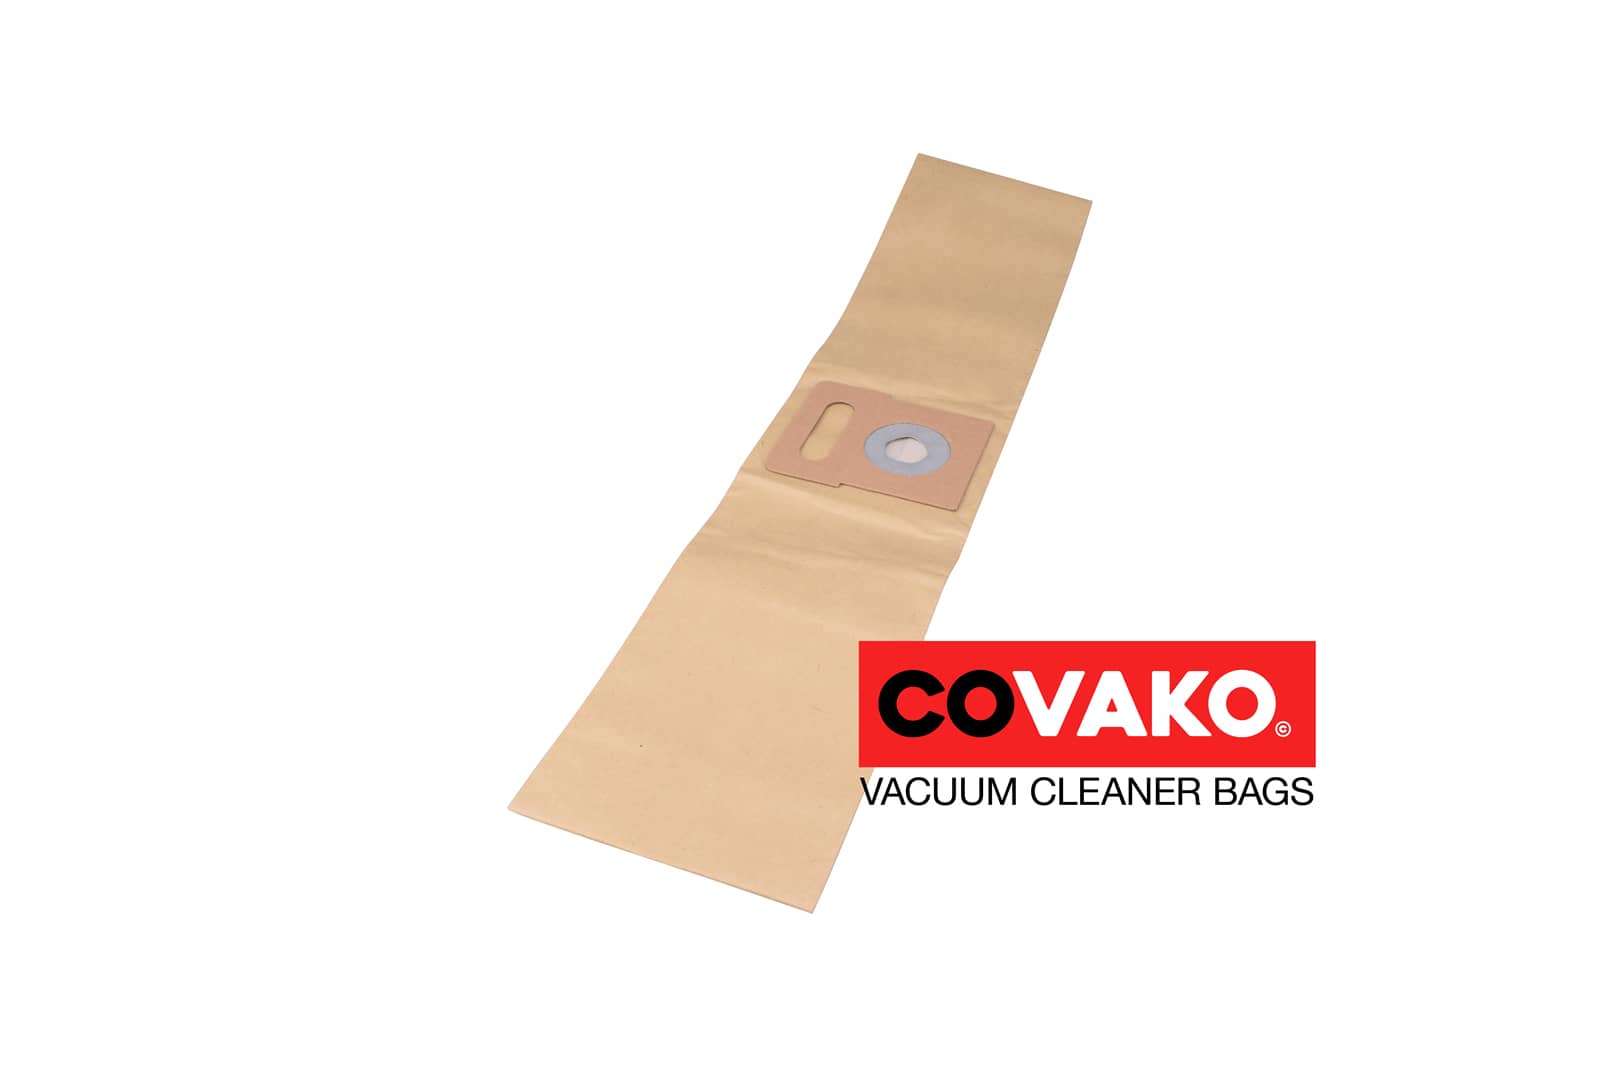 Clean a la Card 643533 / Paper - Clean a la Card vacuum cleaner bags